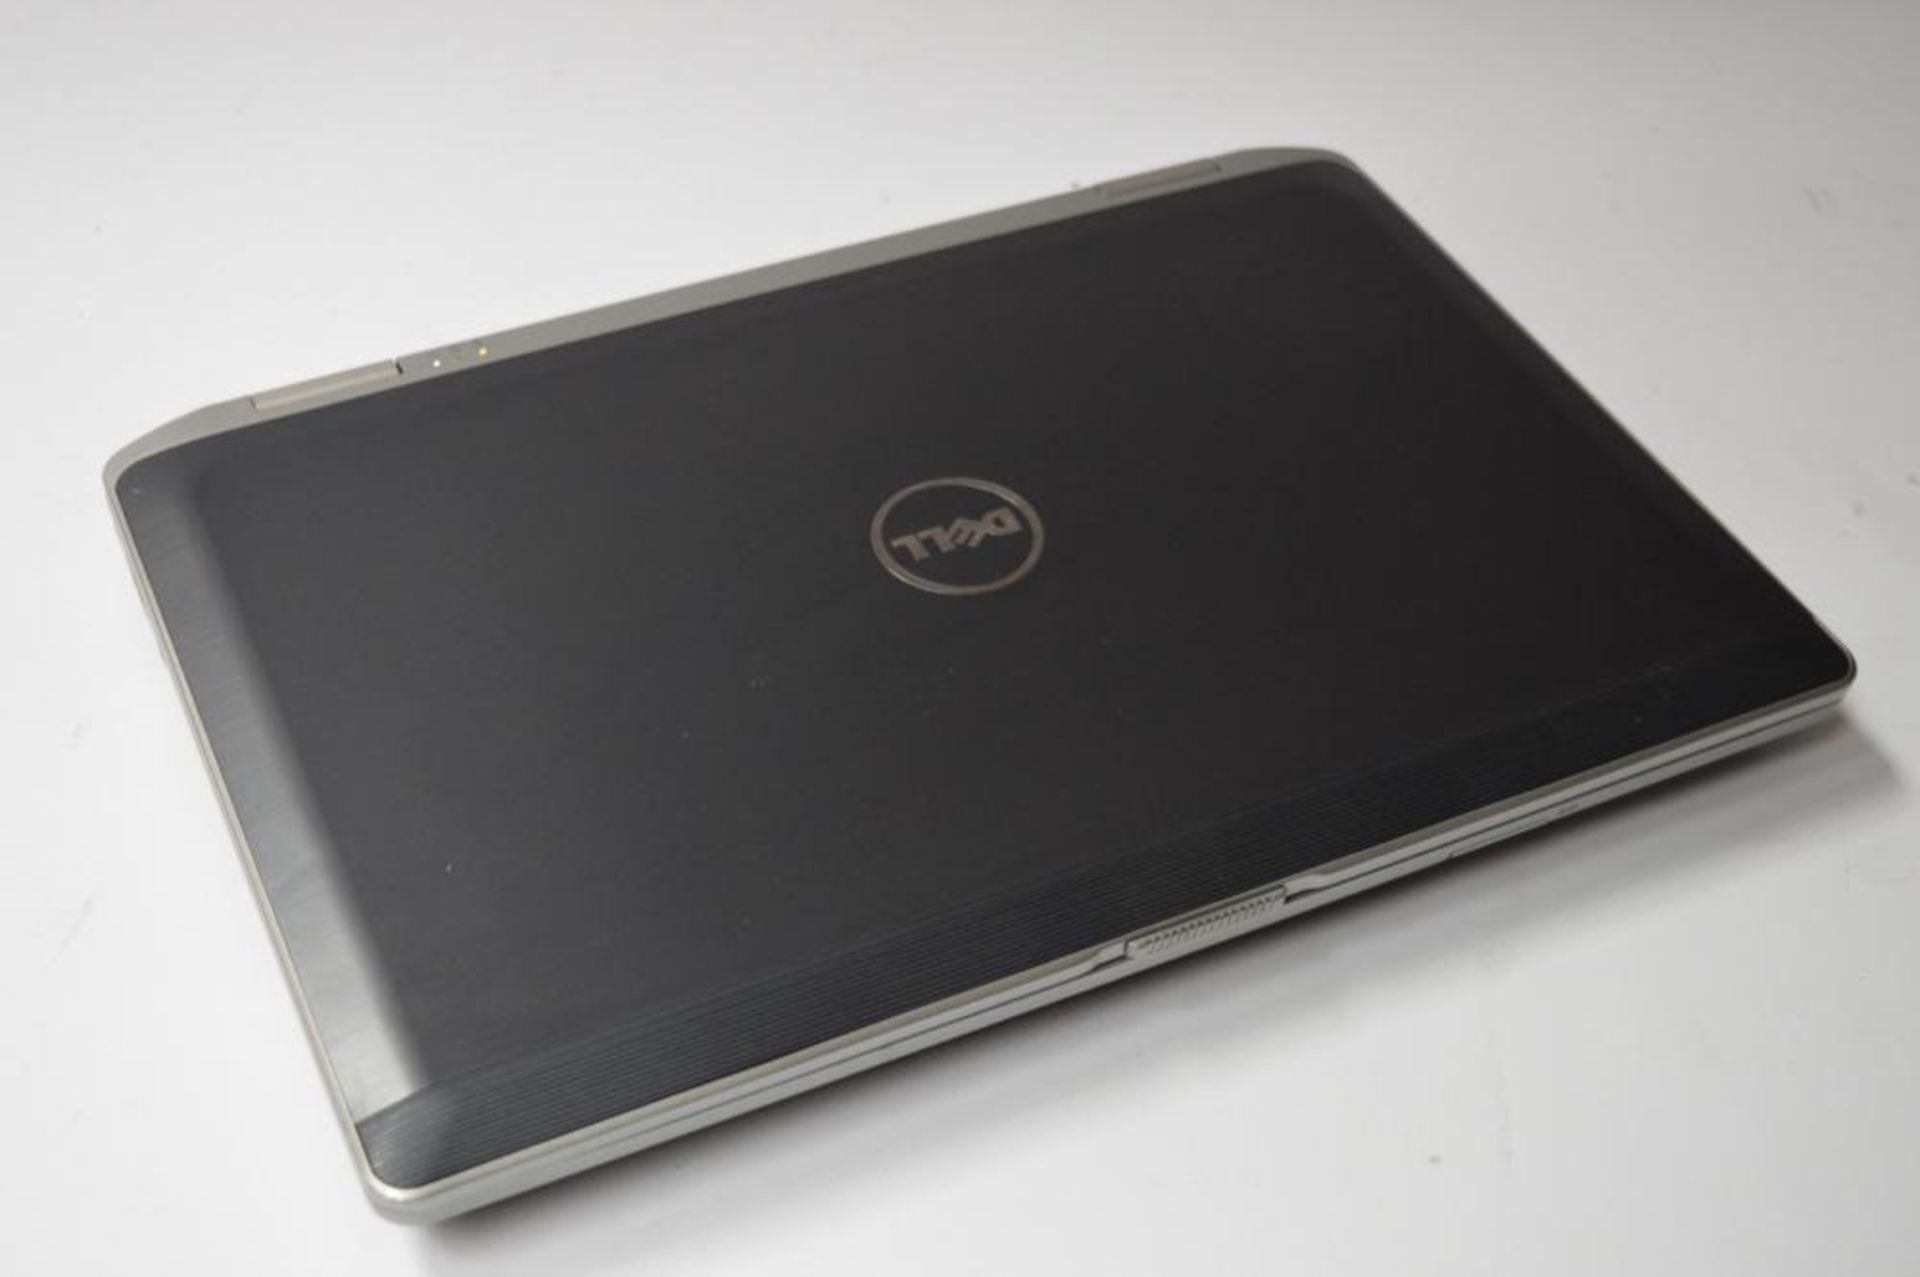 1 x Dell Latitude E6430 Laptop Computer - 14 Inch Screen - Features Intel Core i5 2.6ghz Processor - Image 4 of 4